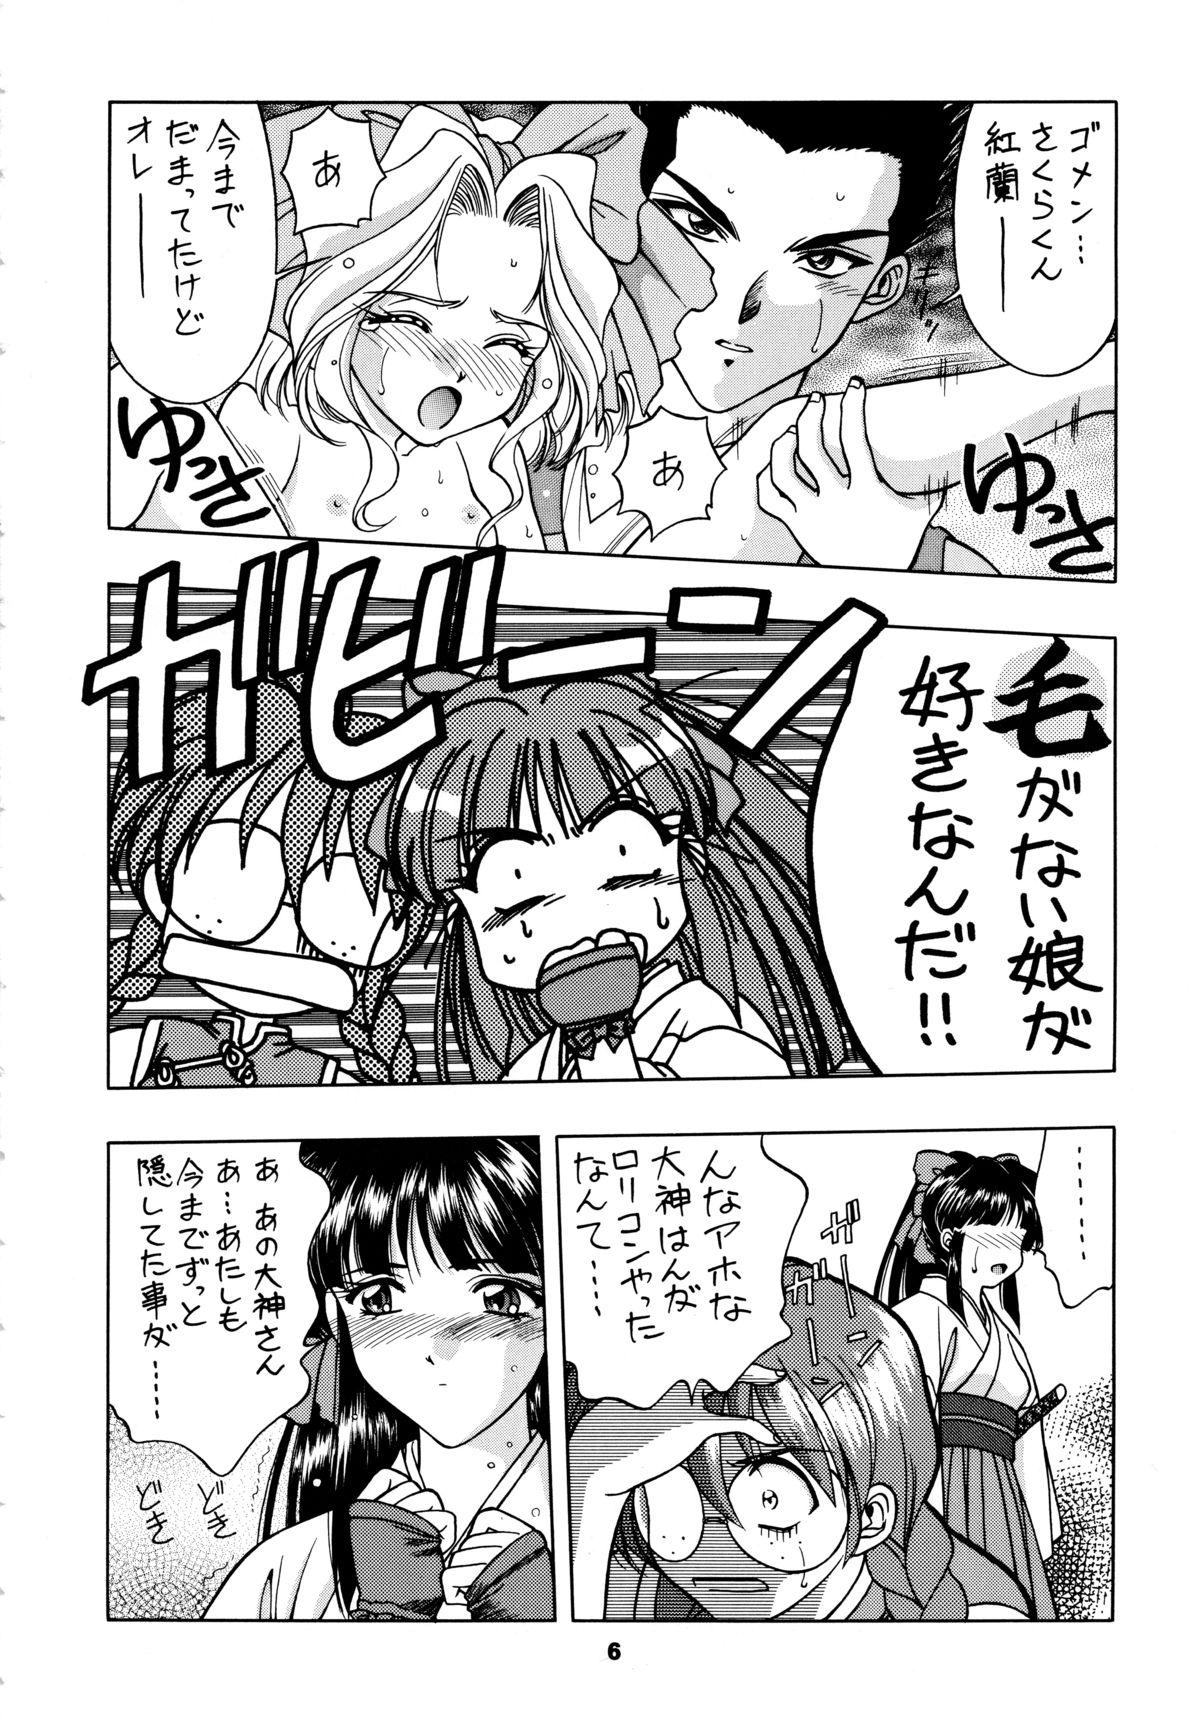 Rica LOVE² BREATH - Sakura taisen Martian successor nadesico Tokimeki memorial Youre under arrest Porno Amateur - Page 6